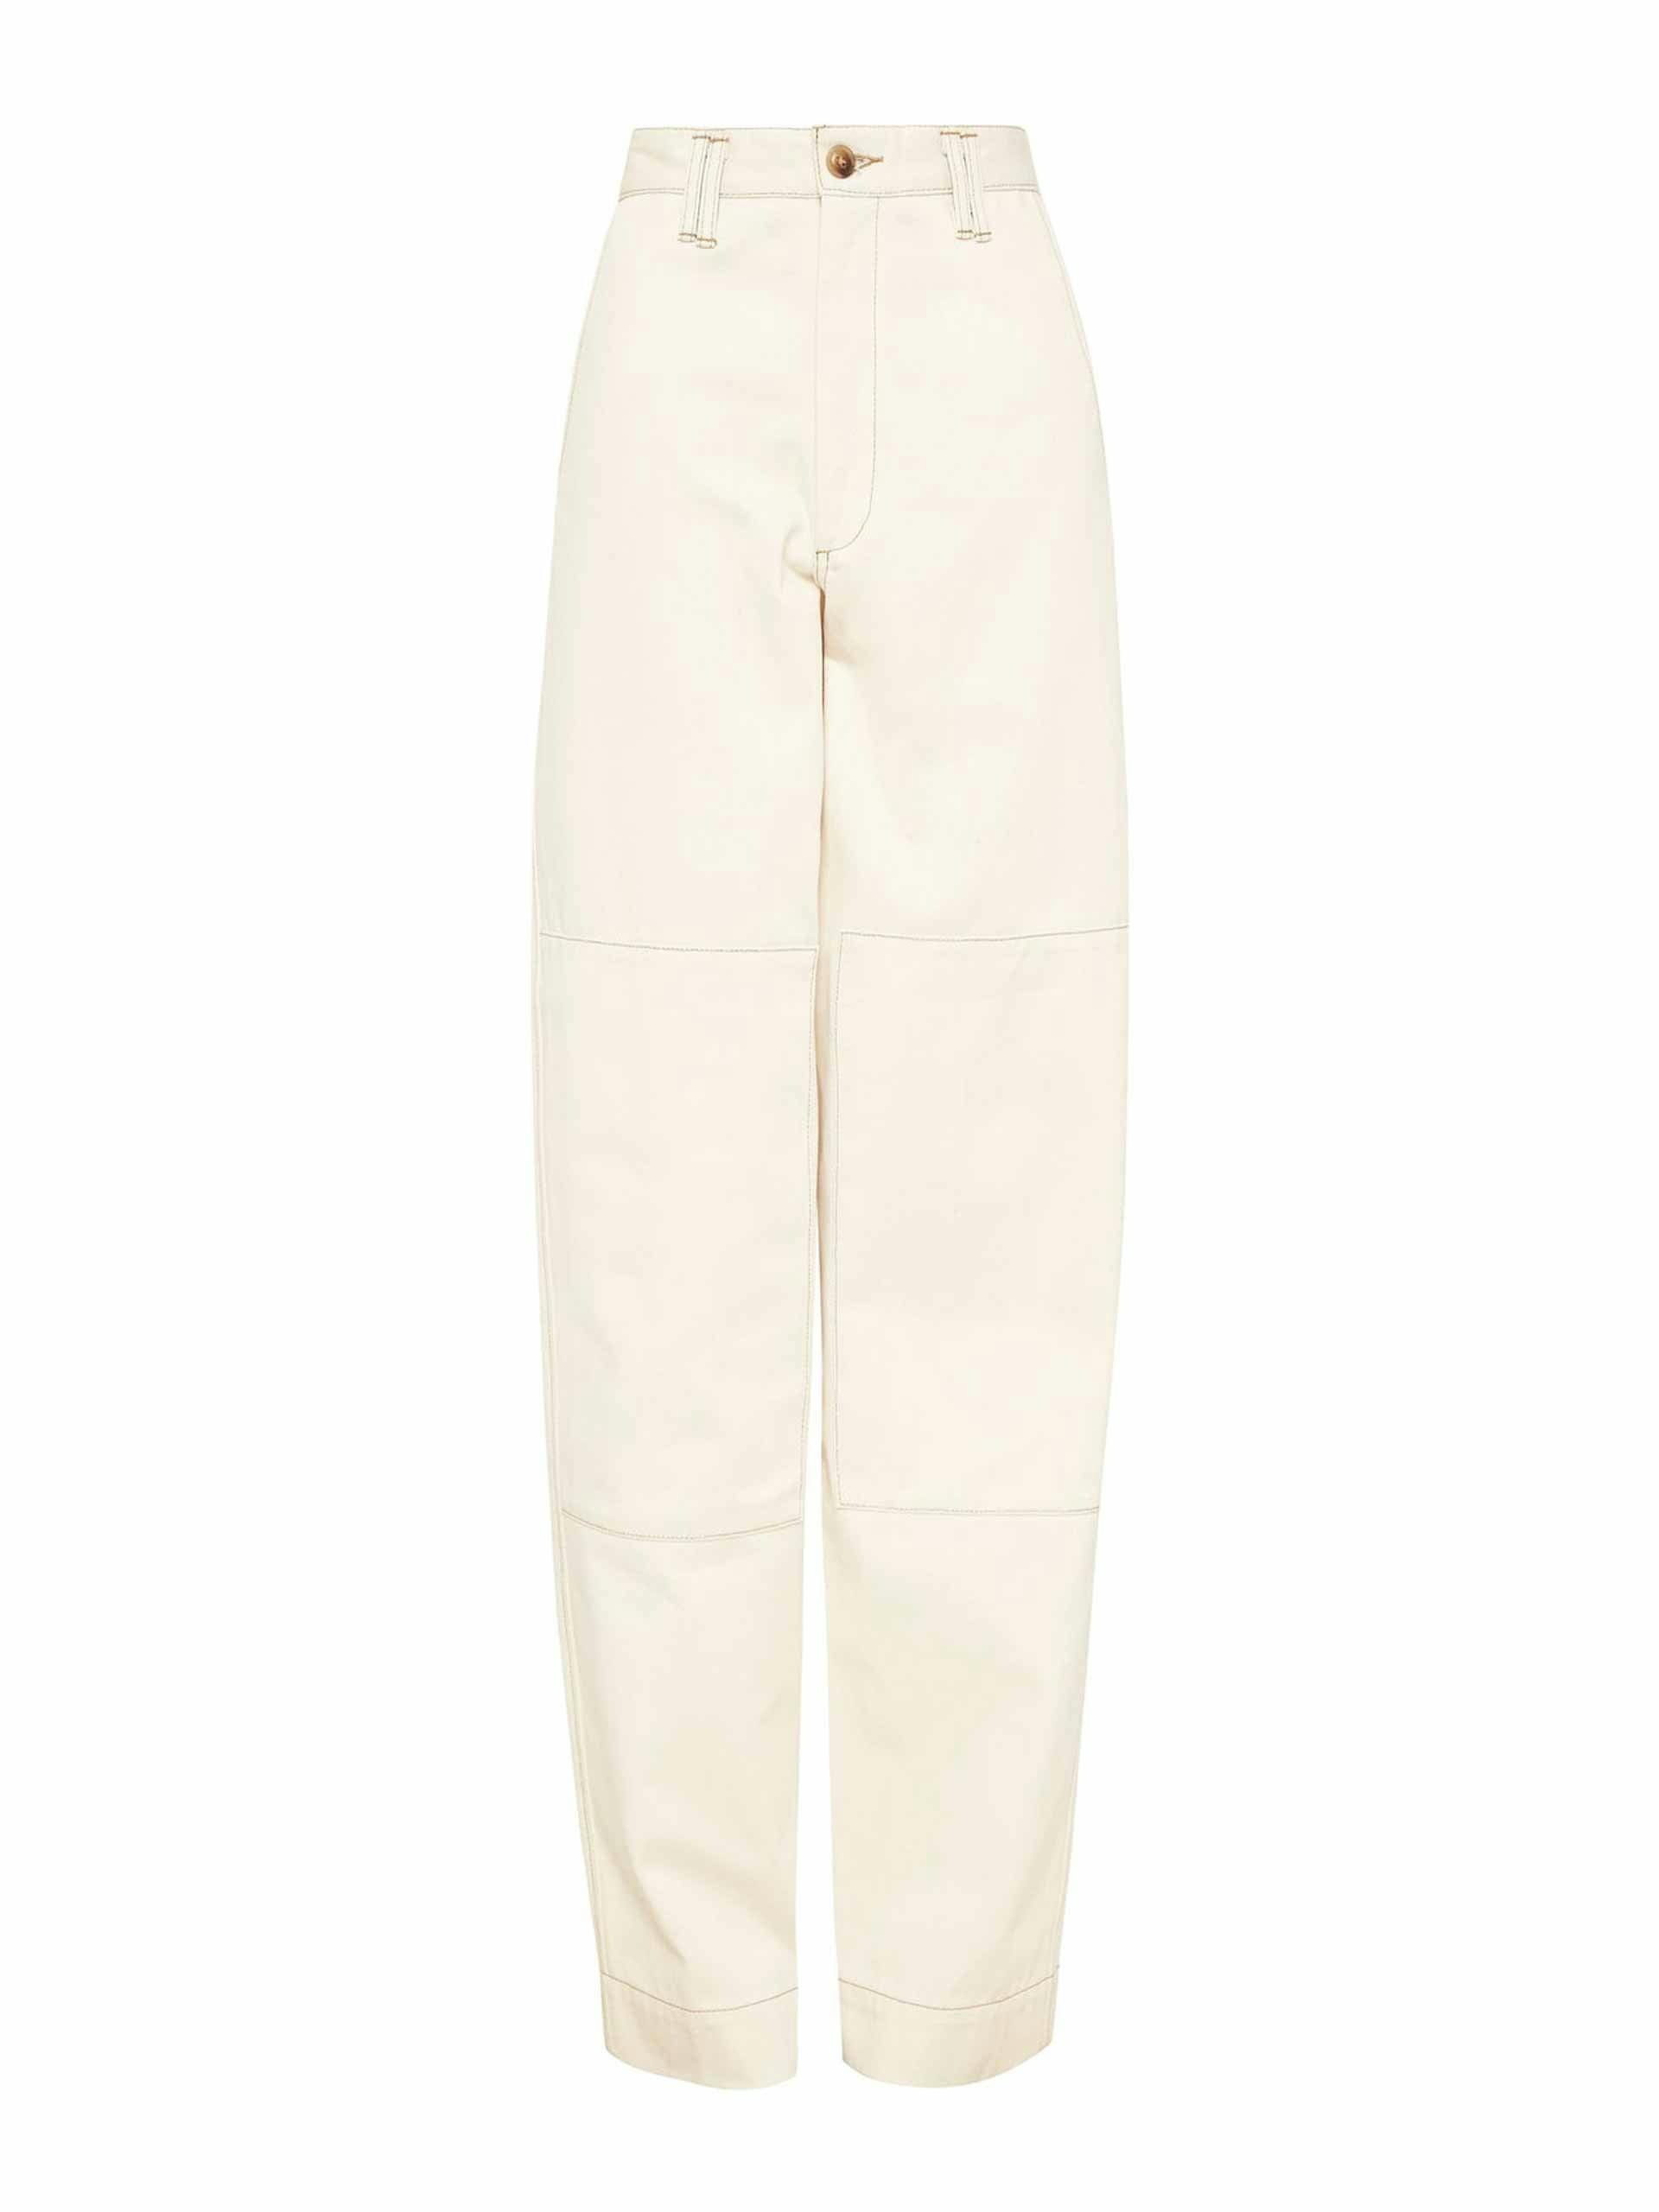 Cream high waisted trousers